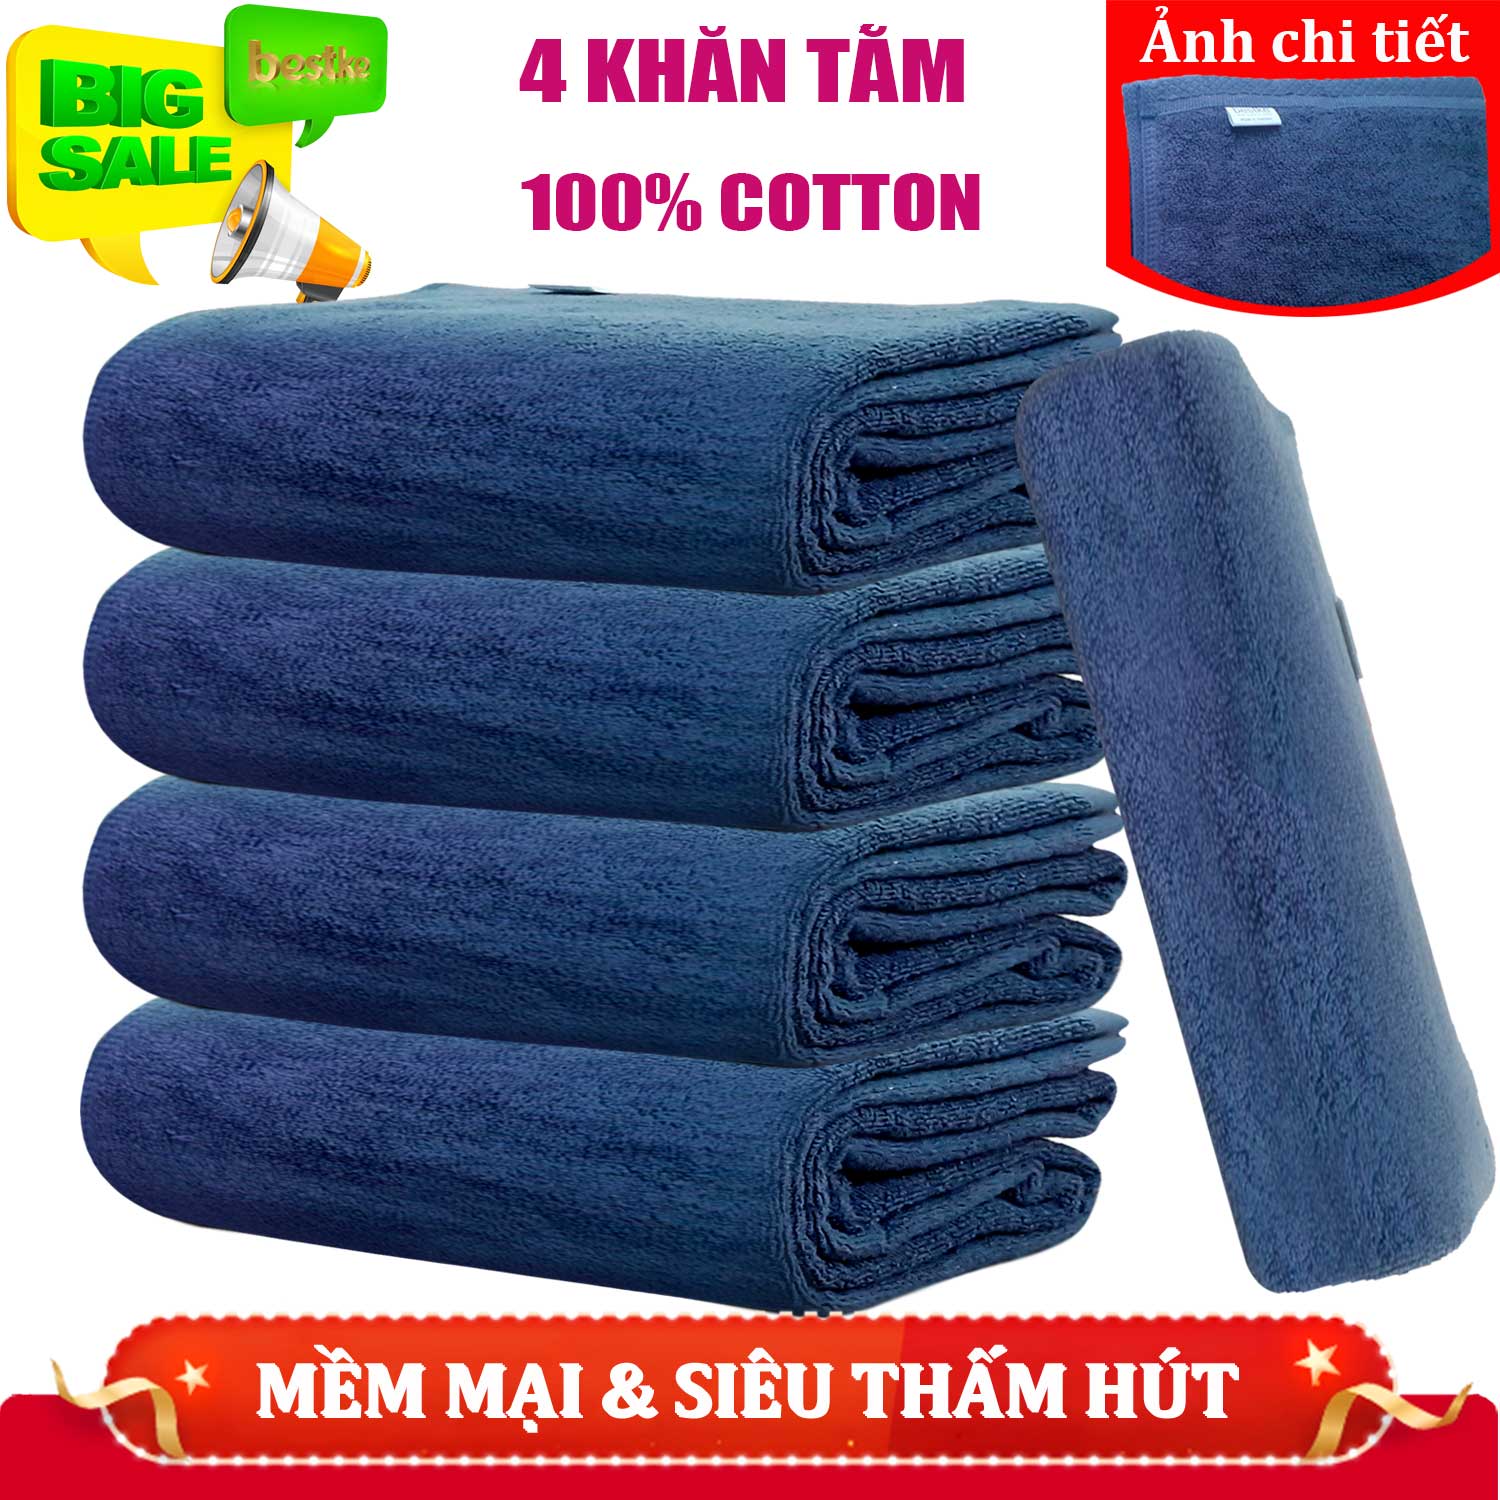 Khăn Tắm bestke 100% Cotton màu xanh đậm combo 5 cái size 120*60cm, trọng lượng 320g/pcs, cotton towels, manufacturer